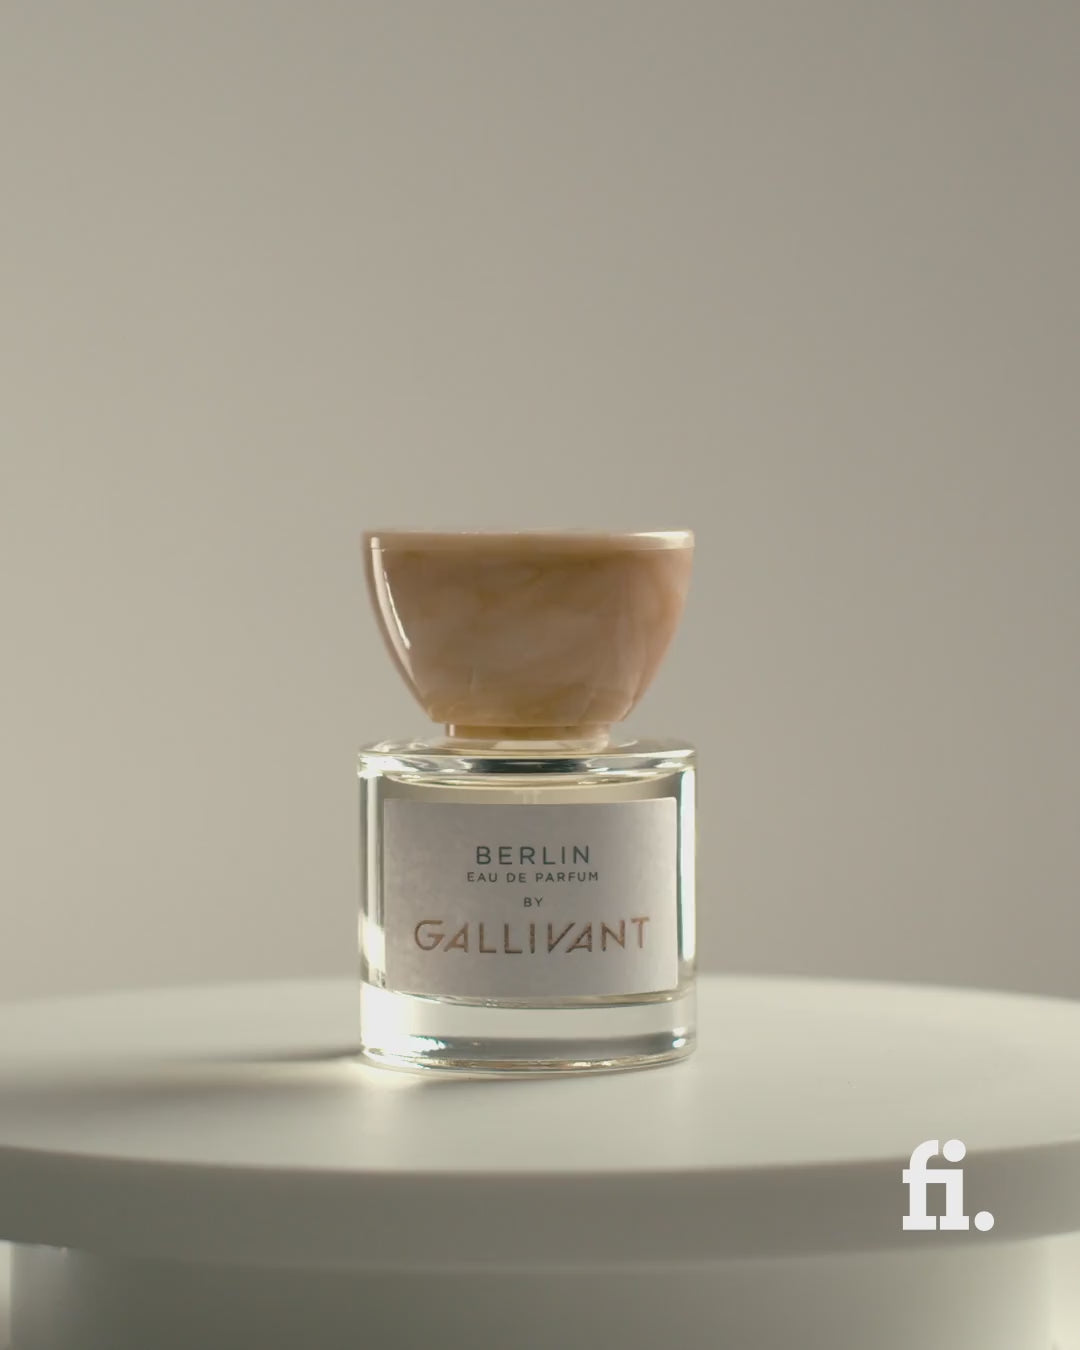 Video of Berlin Eau de Parfum 30ml Bottle by Gallivant